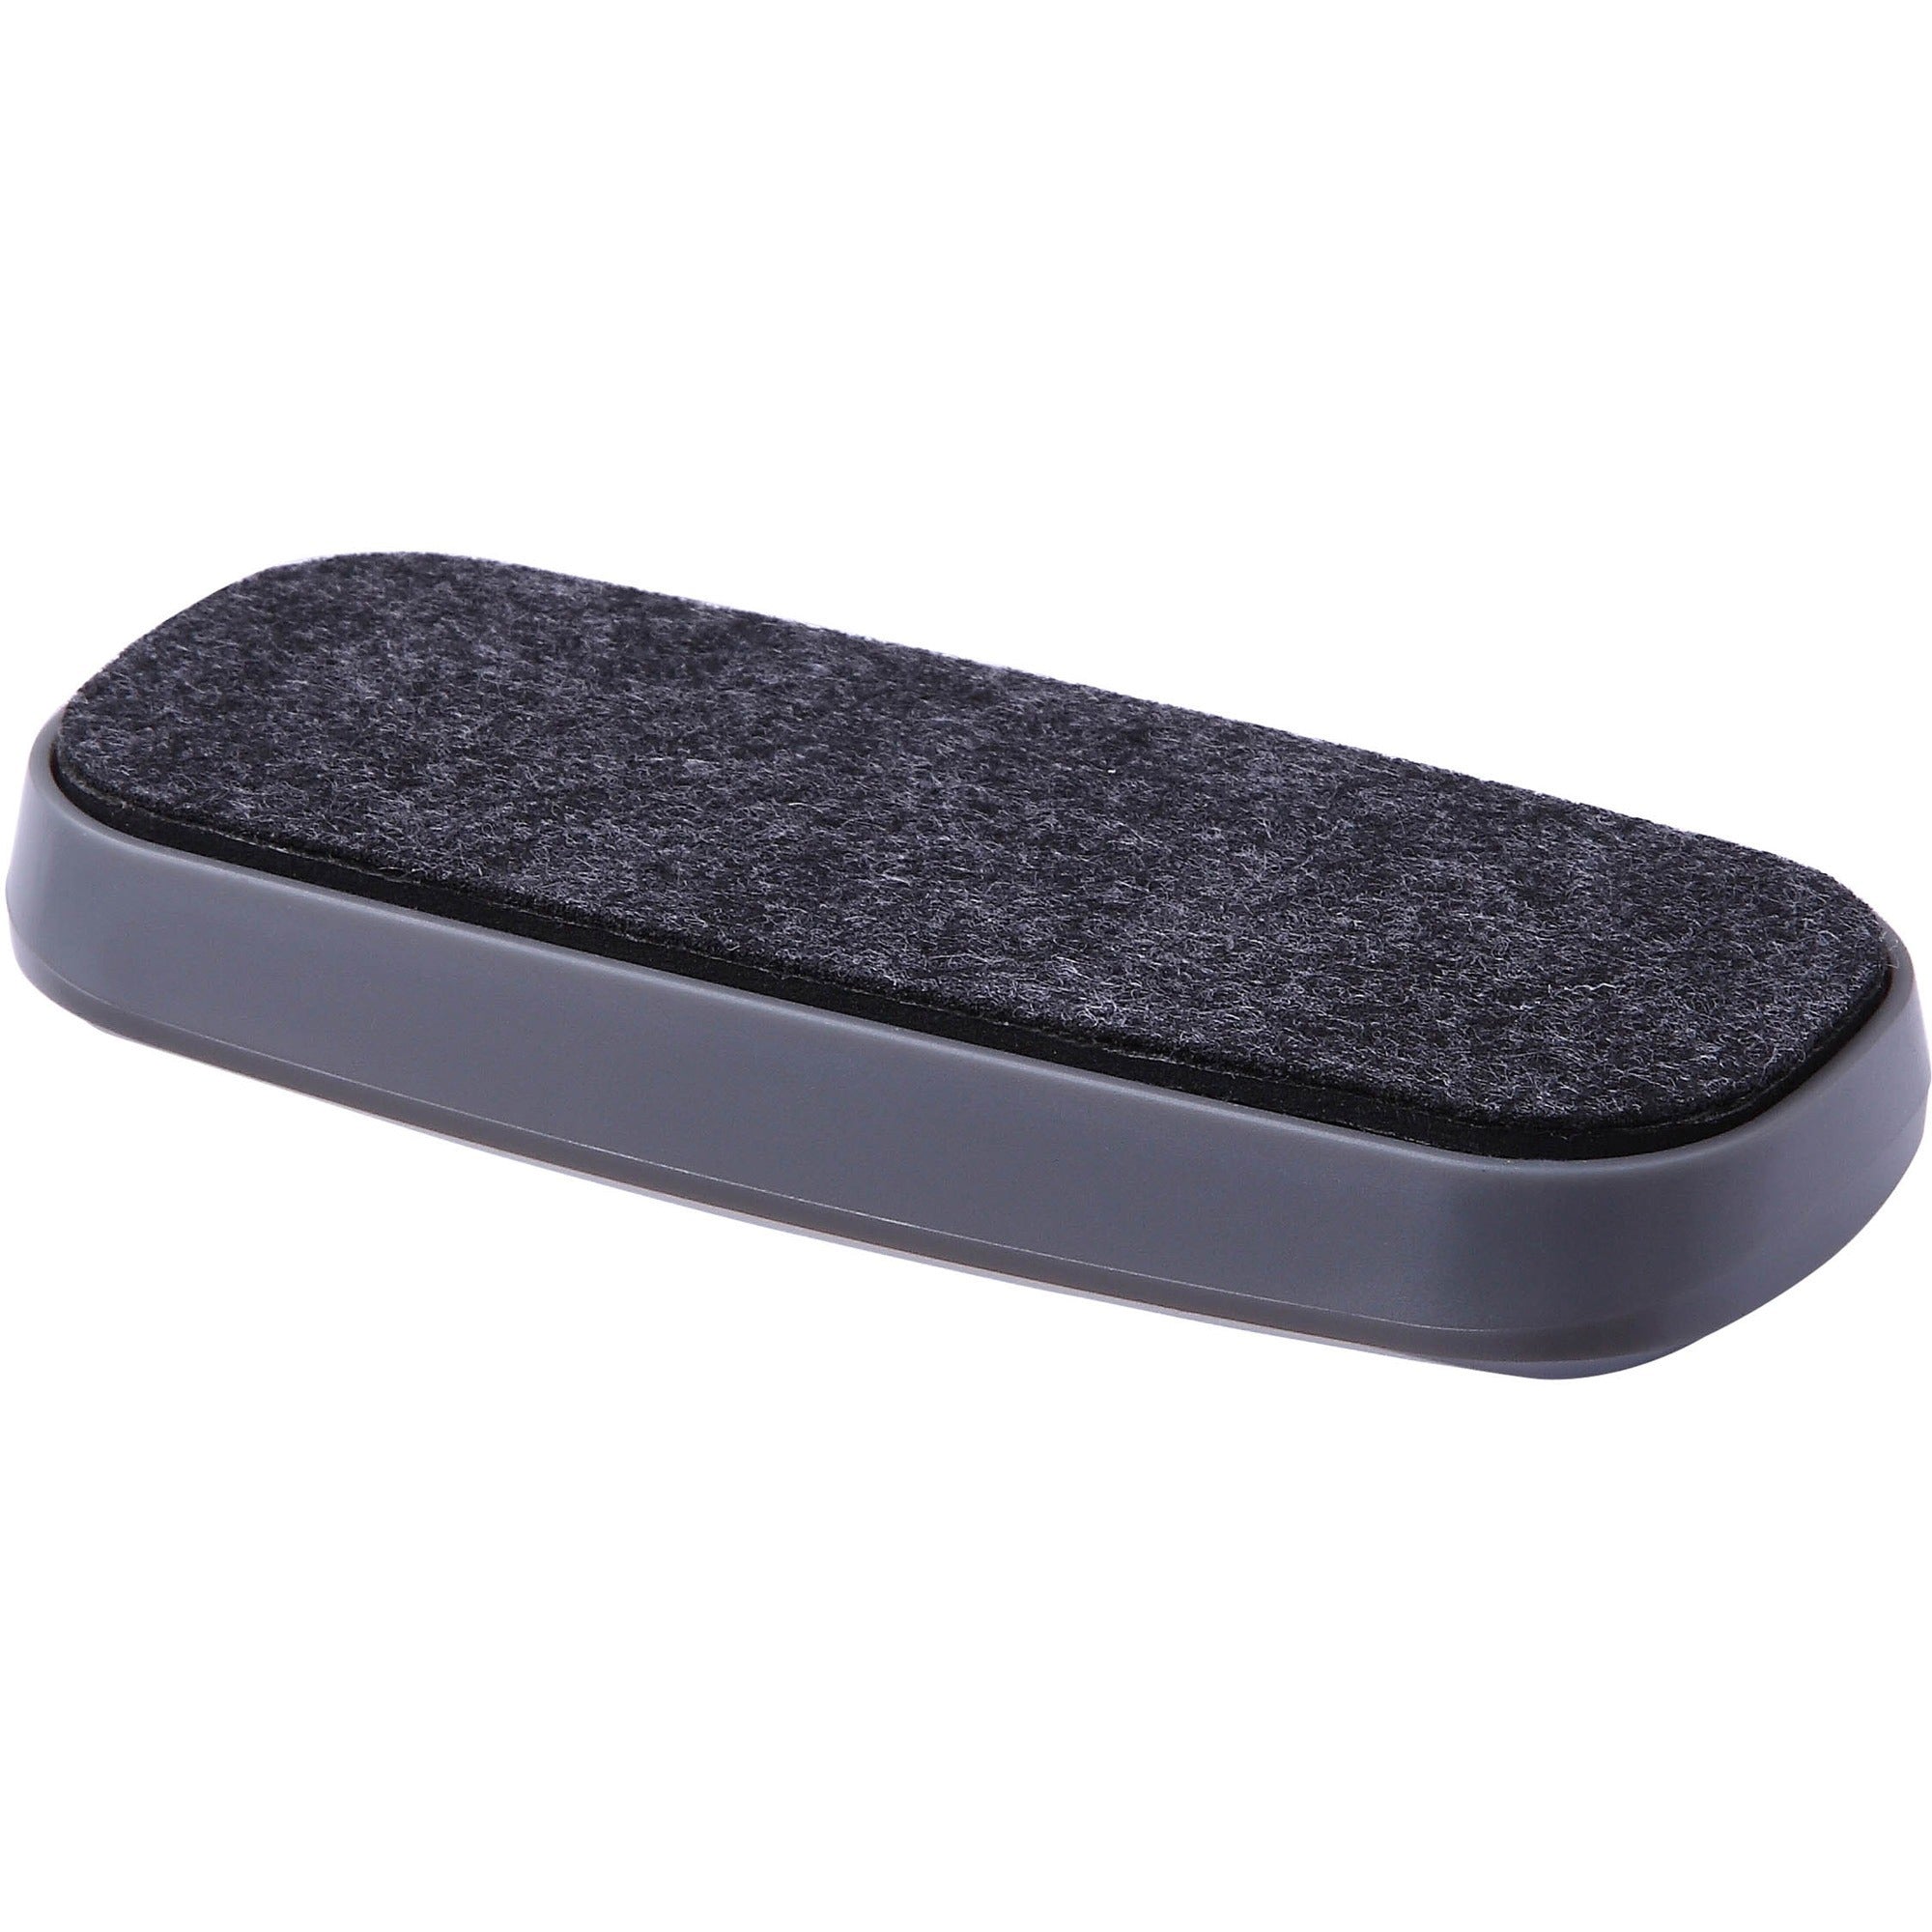 Lorell Rare Earth Magnet Board Eraser - Magnetic - Black, White - Plastic - 1Each - 